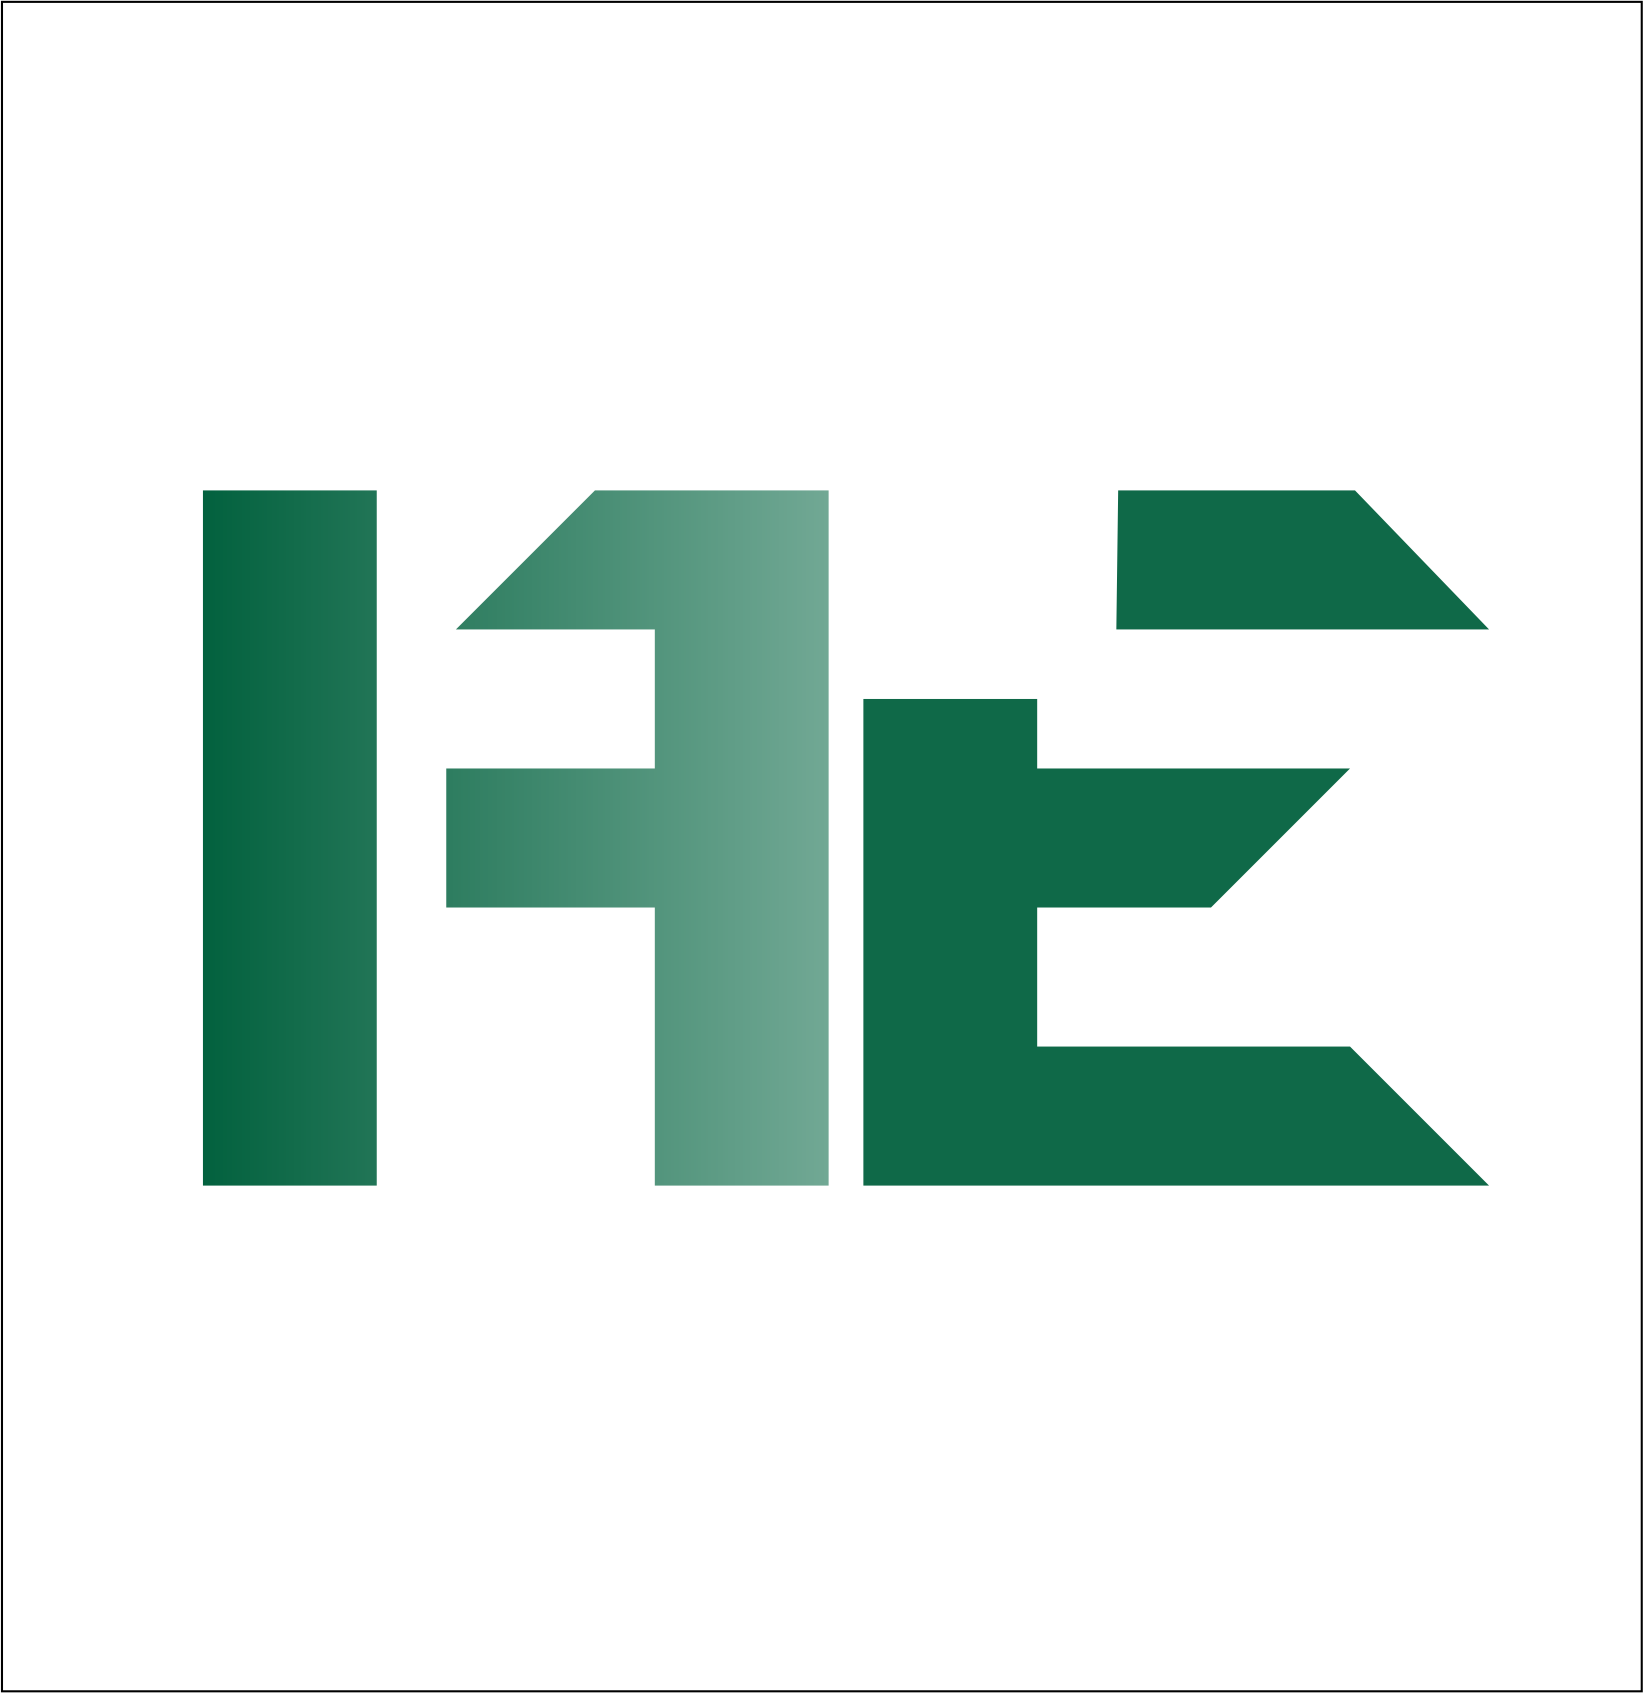 Hacktoberfest Ekiti logo